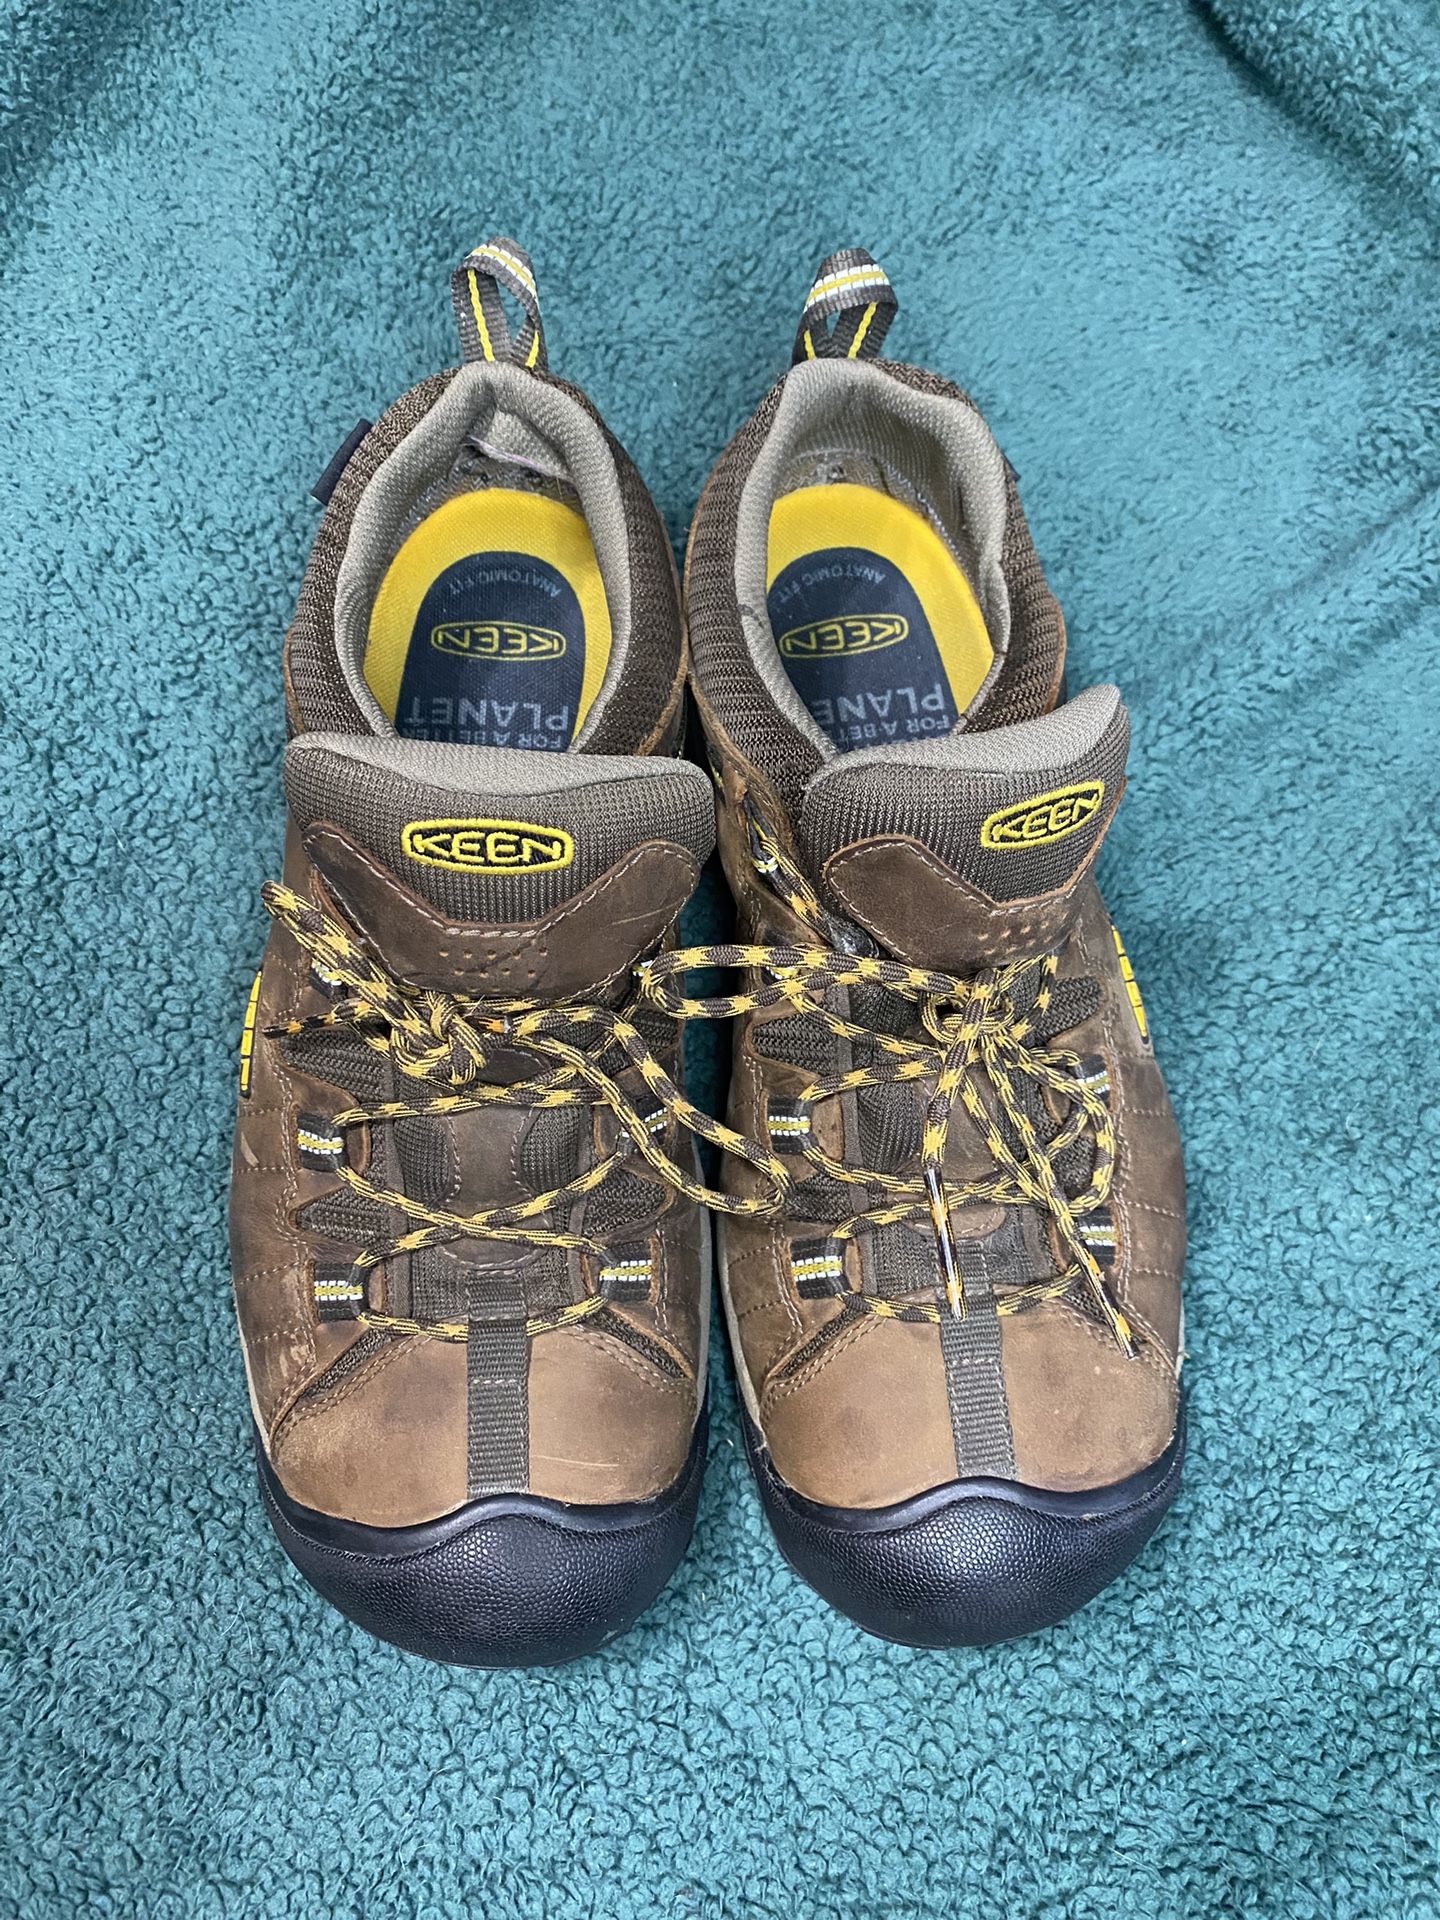 KEEN Targhee II Mid Waterproof Hiking Boots for Men